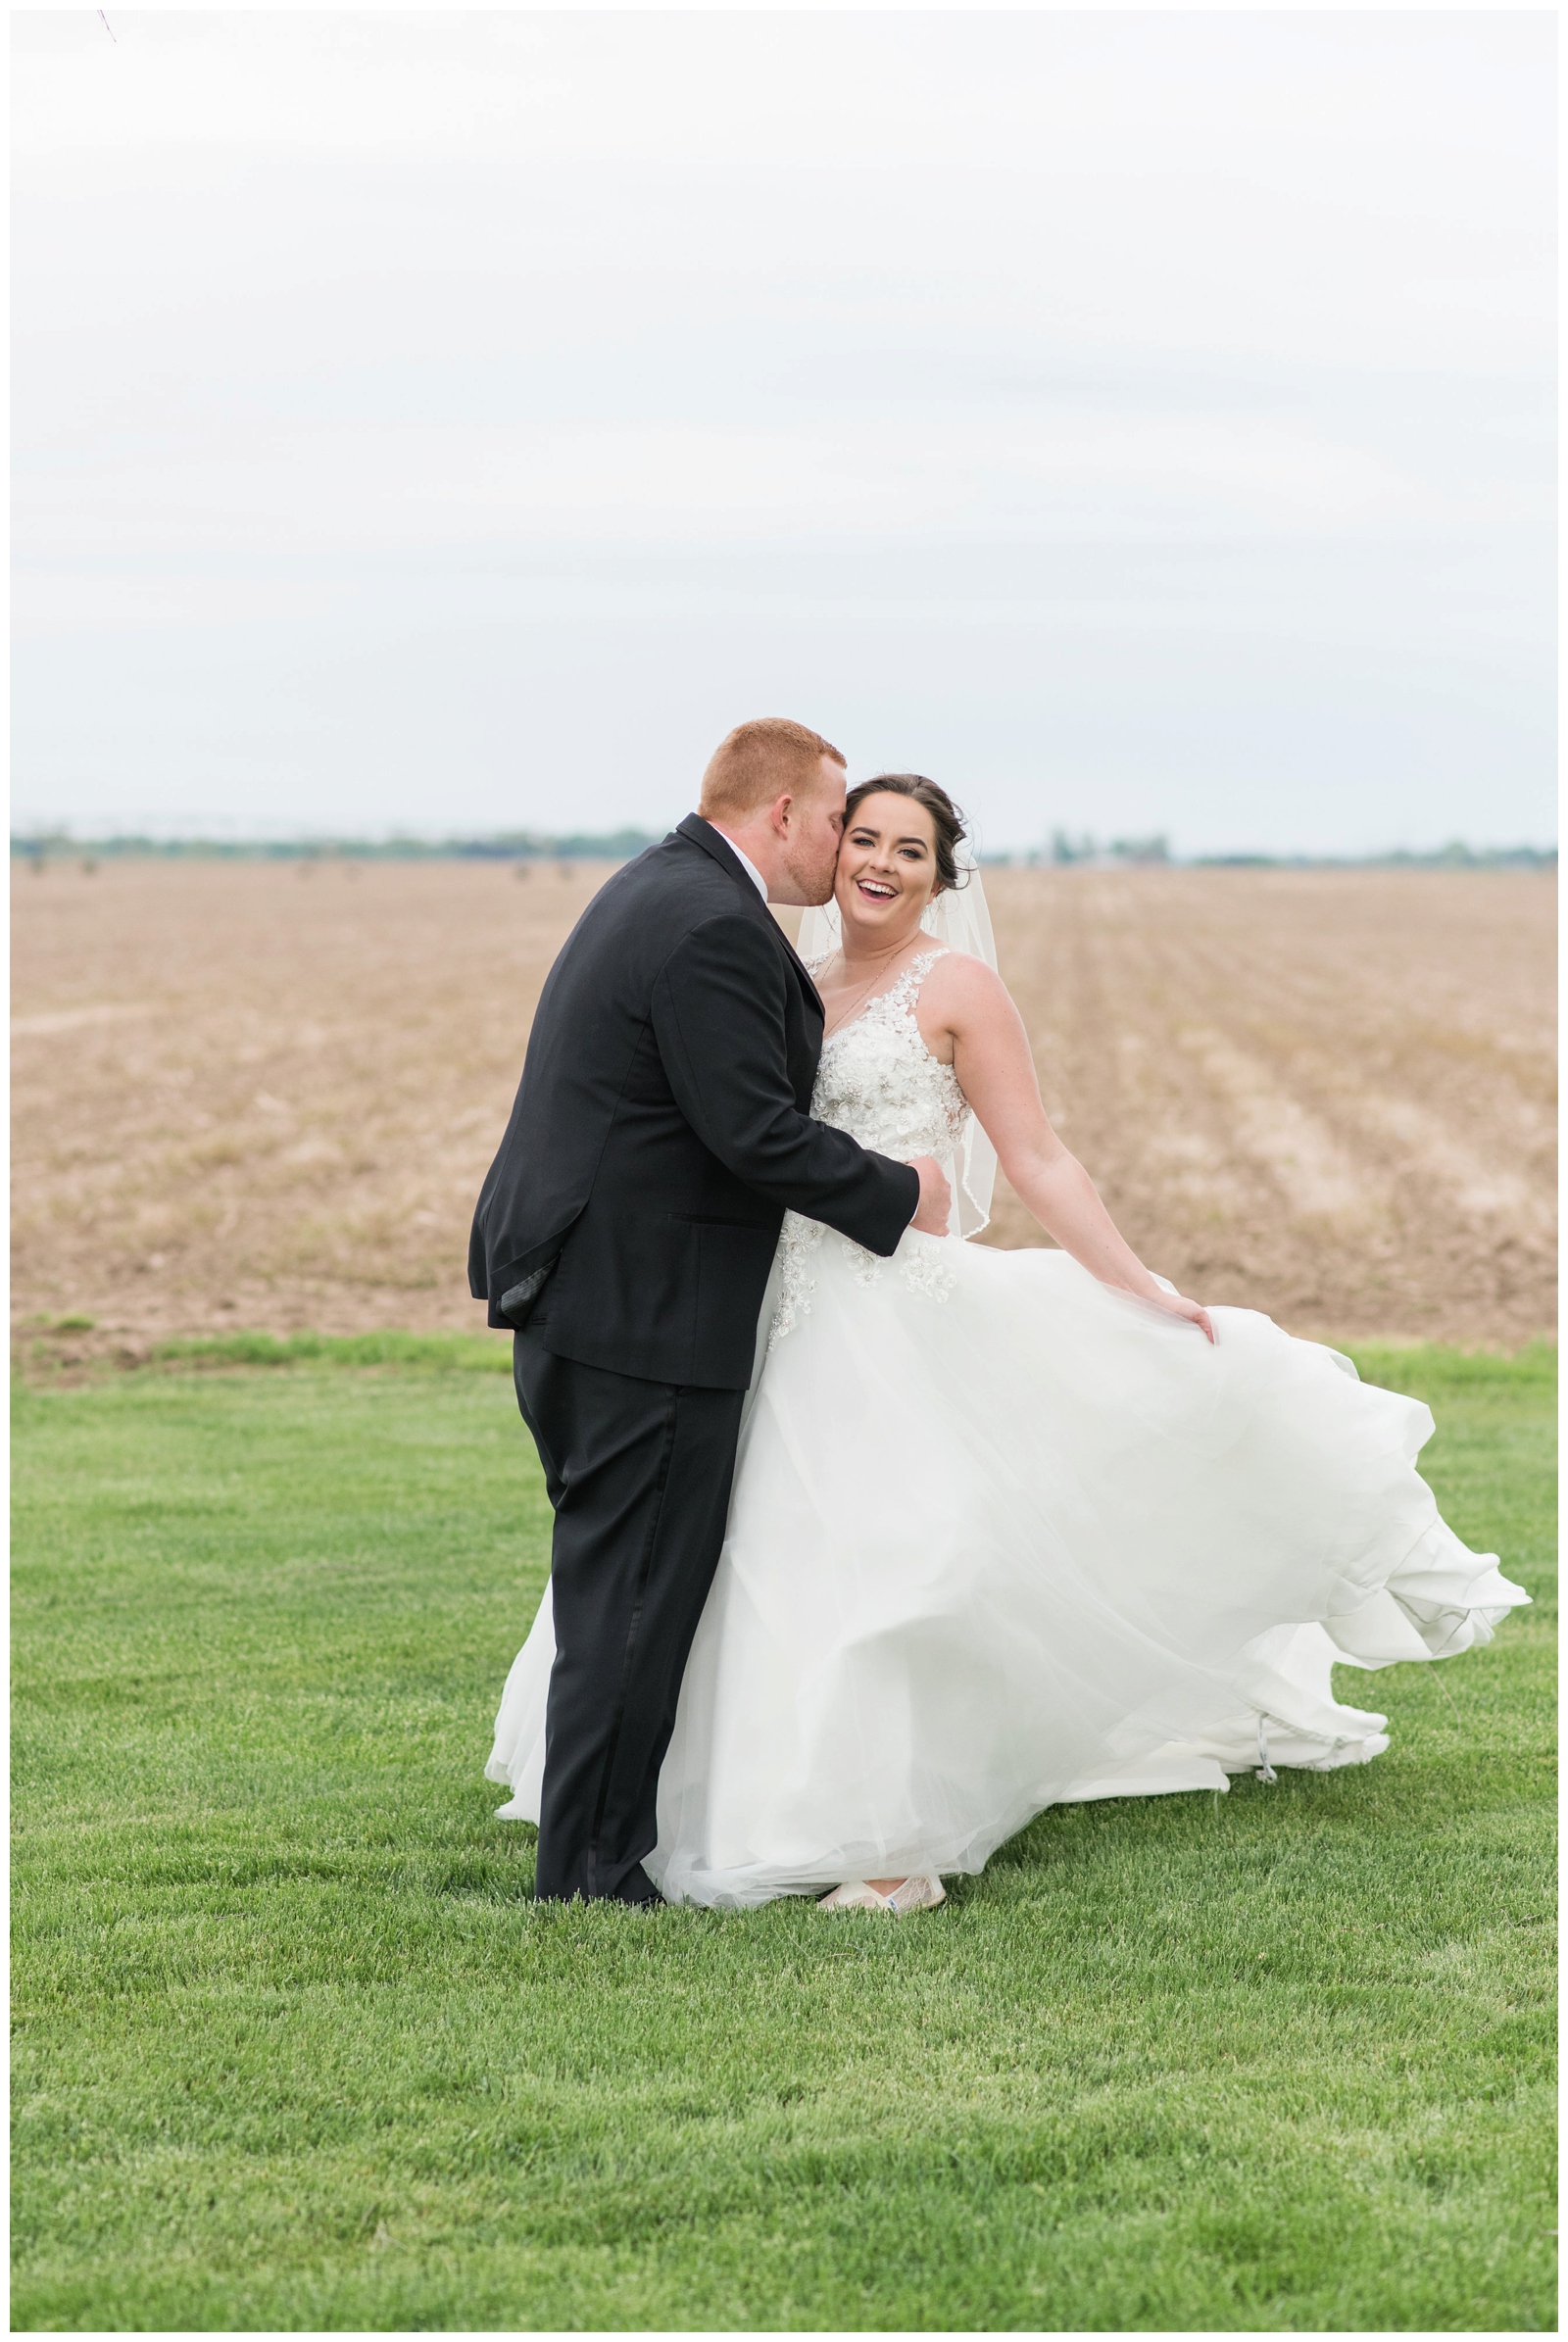 bride and groom dance during wedding portraits at Urbana OH wedding venue Pretty Prairie Farms